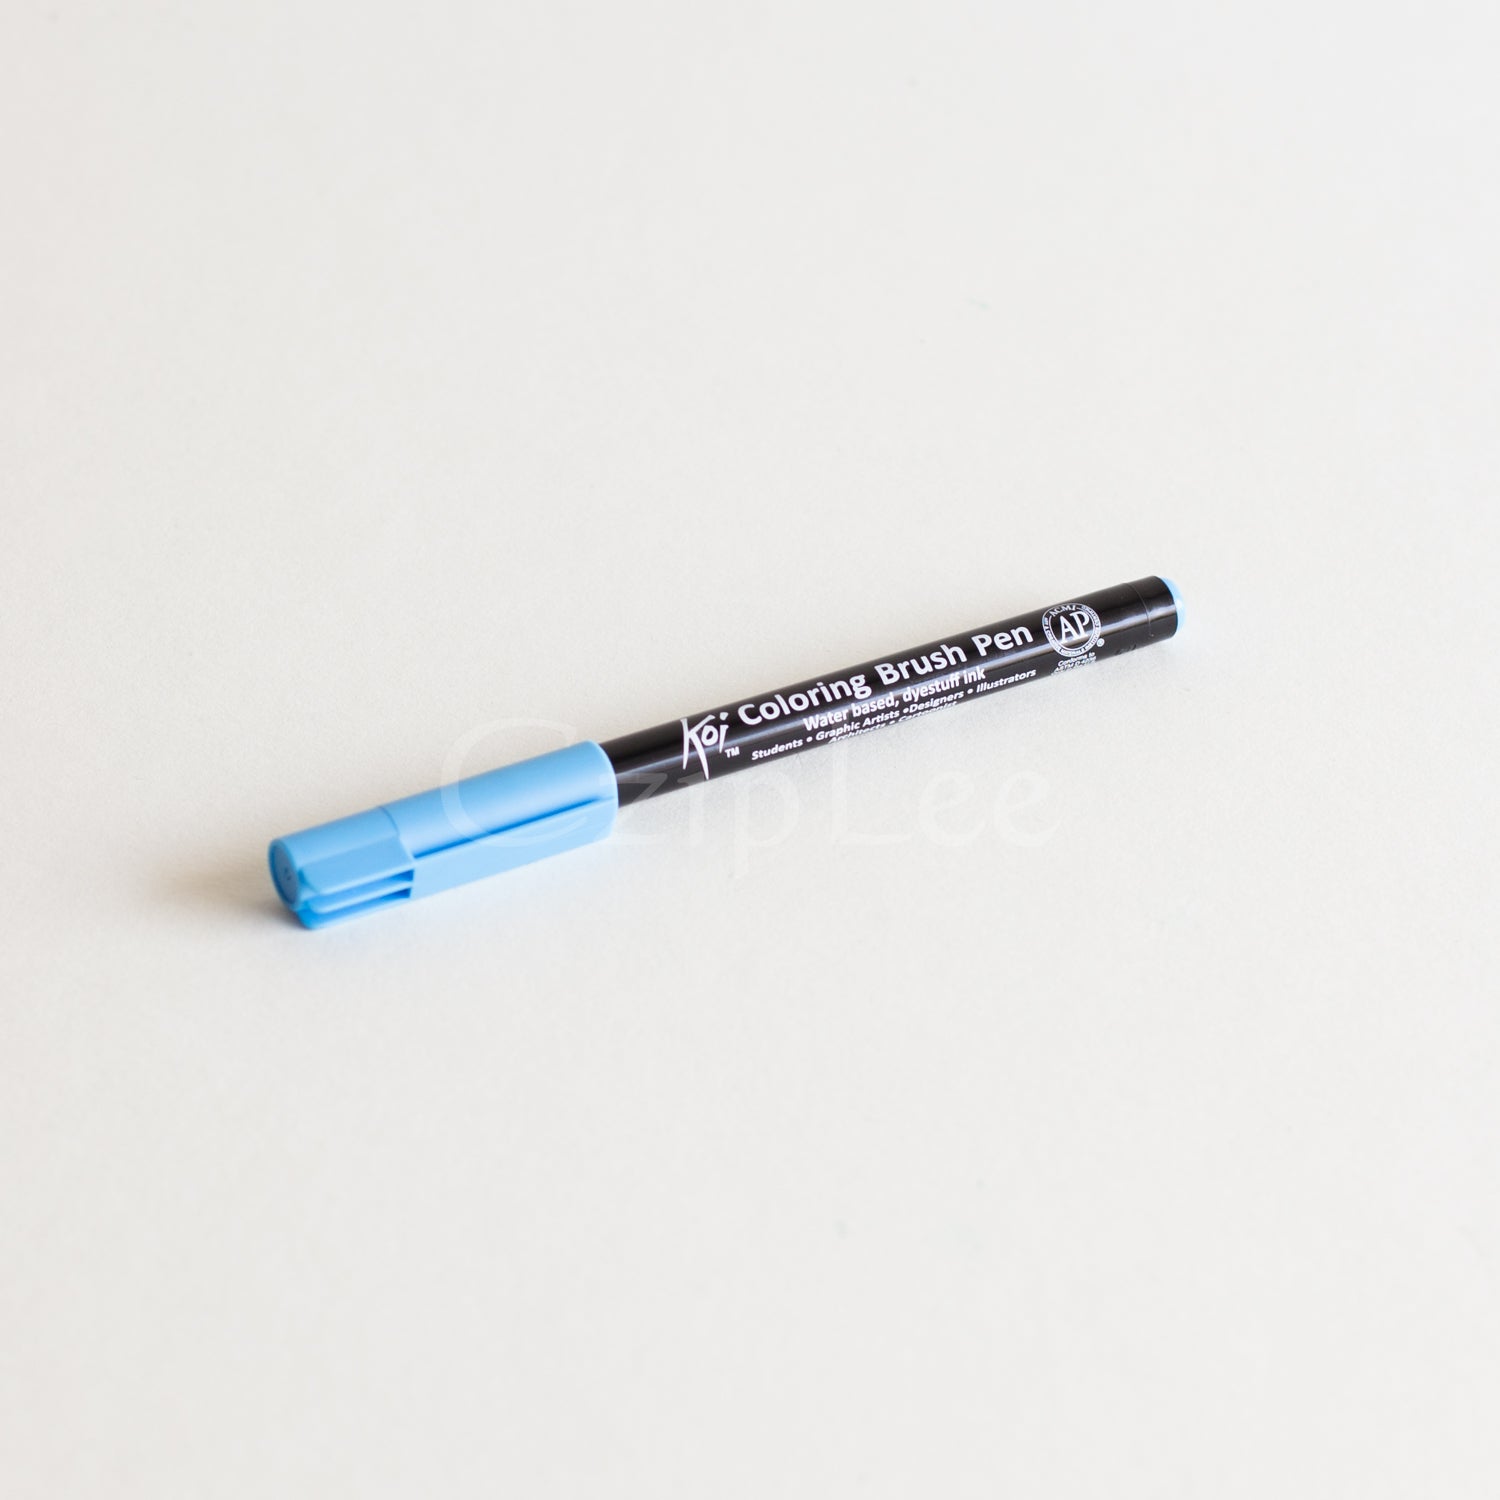 SAKURA Koi Brush Pen #137 Aqua Blue